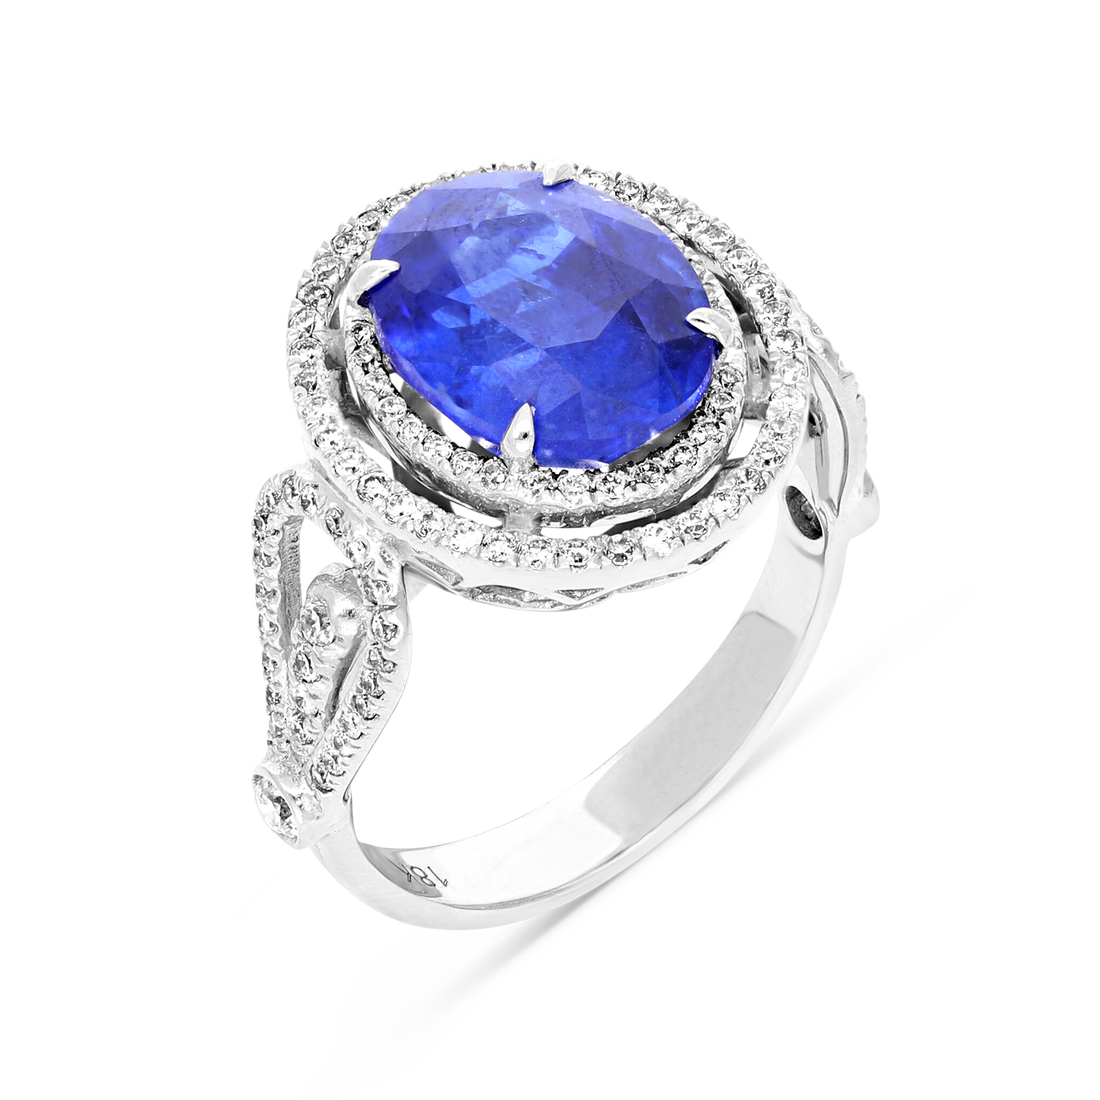 Vintage Style Blue Sapphire Ring - 6.5 Carat